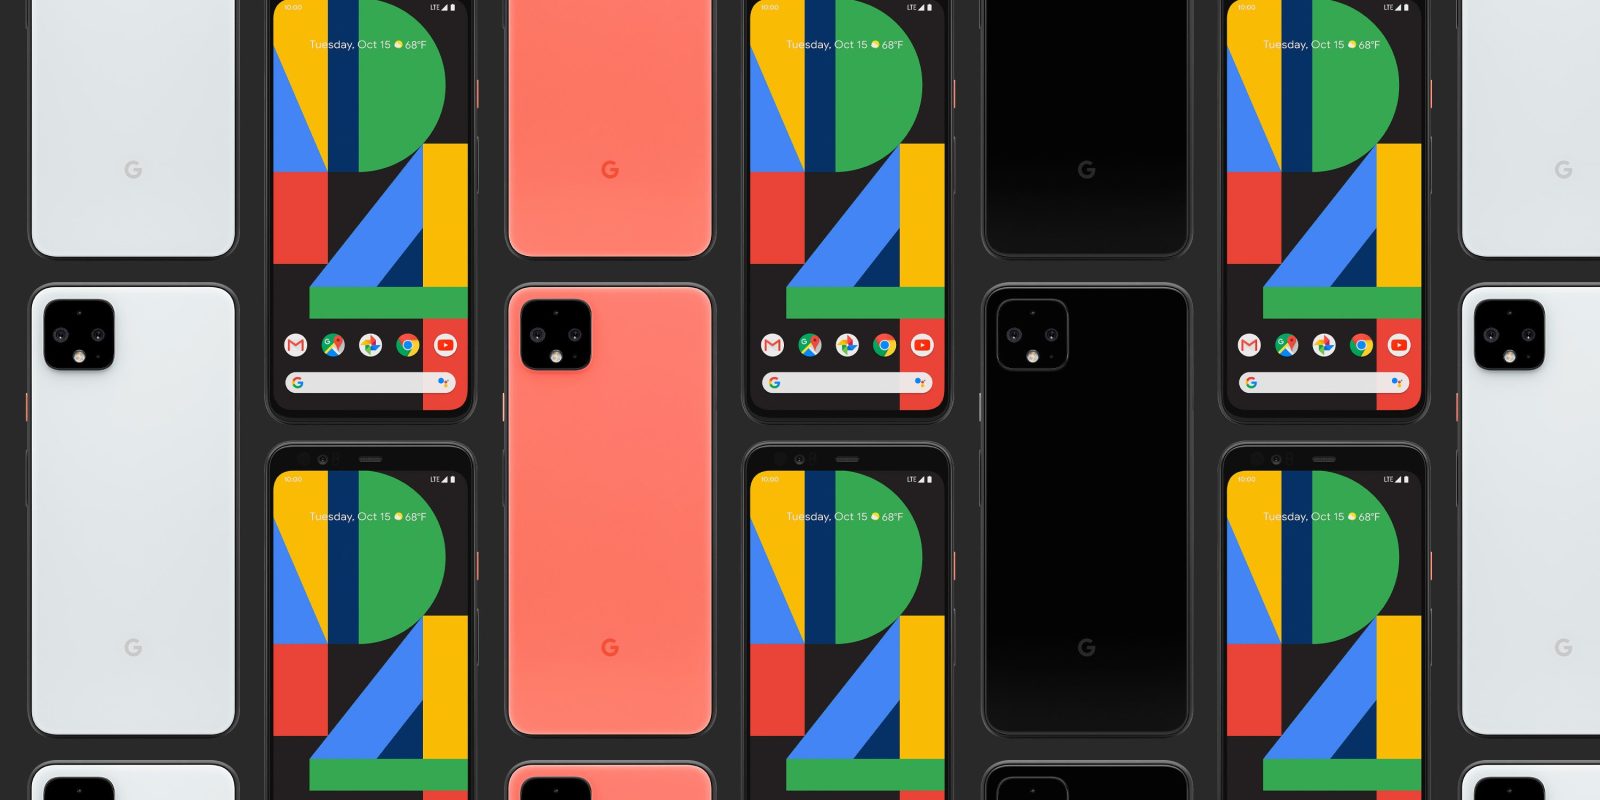 Google Apple competitors Pixel 4 smartphone